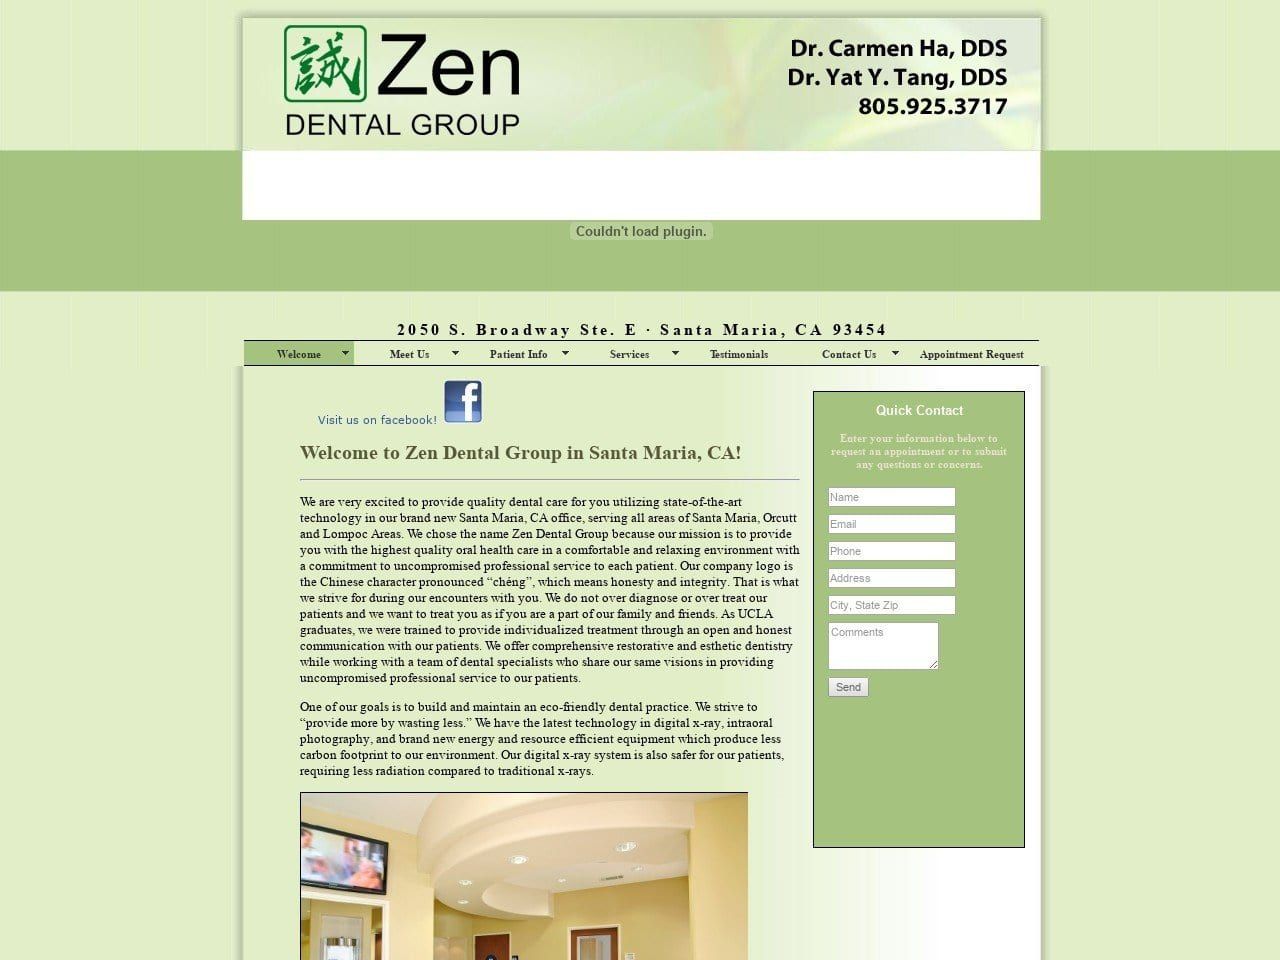 Zen Dental Group Website Screenshot from zendentalgroup.com